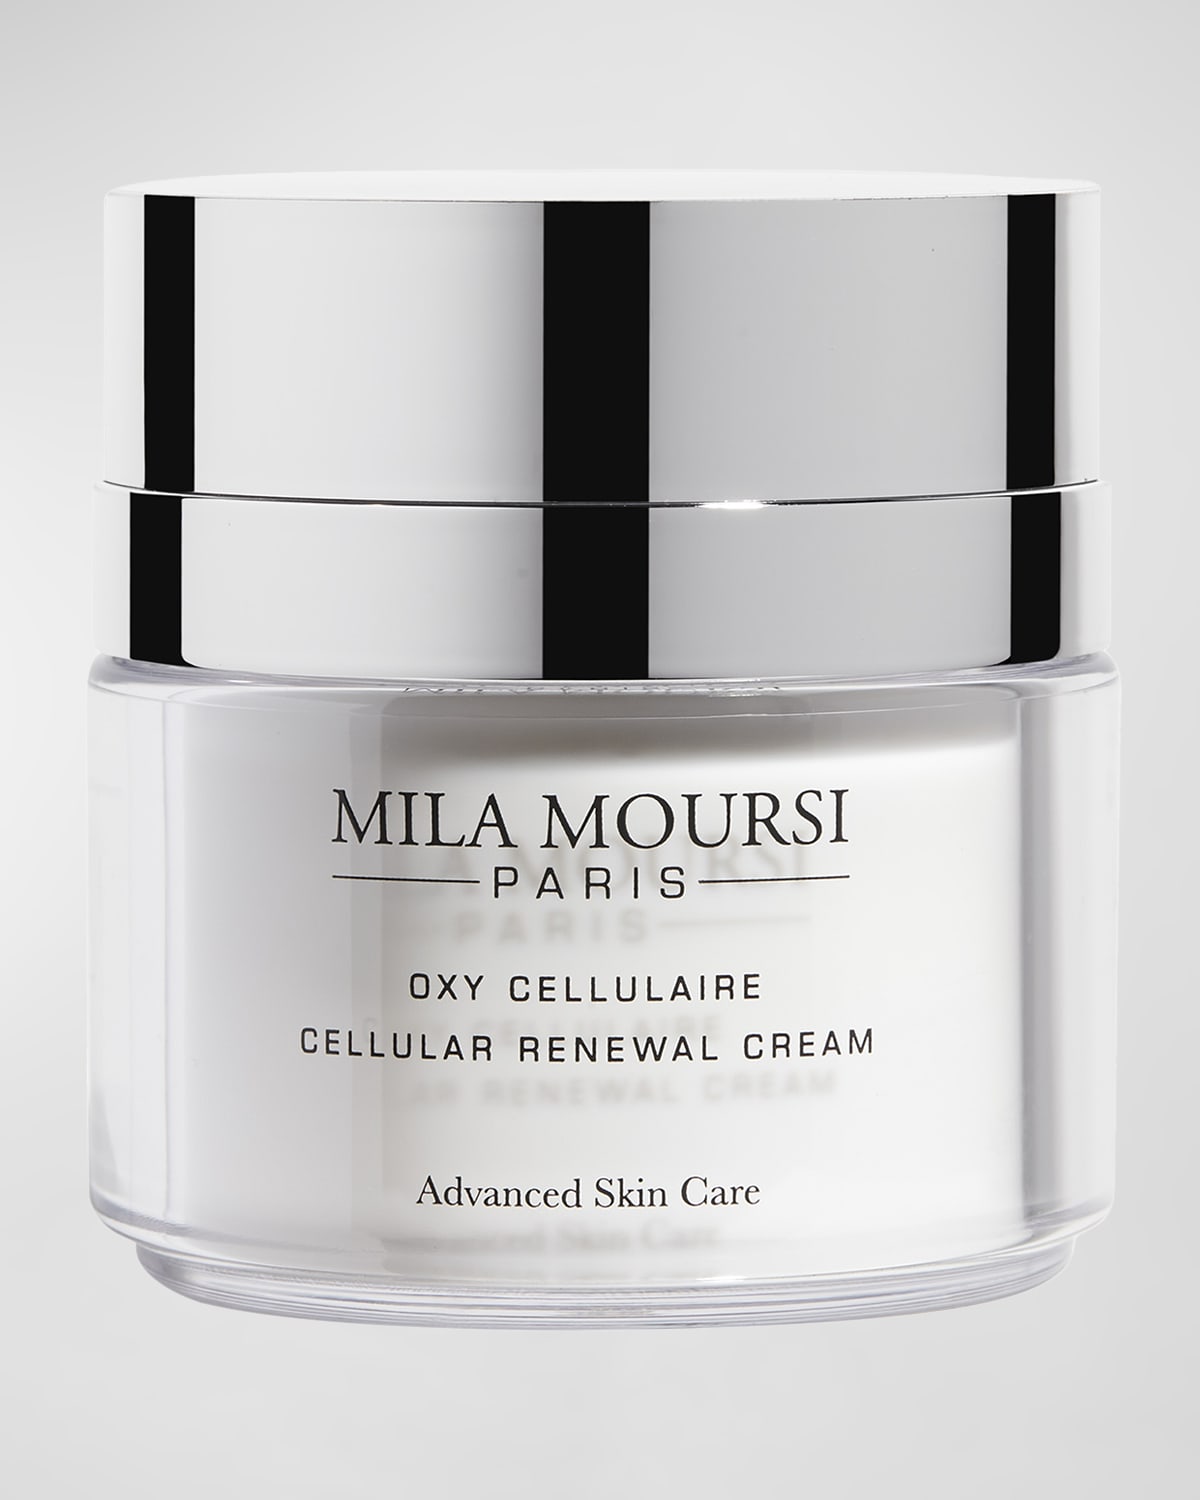 Mila Moursi 1 oz. Cellular Renewal Cream